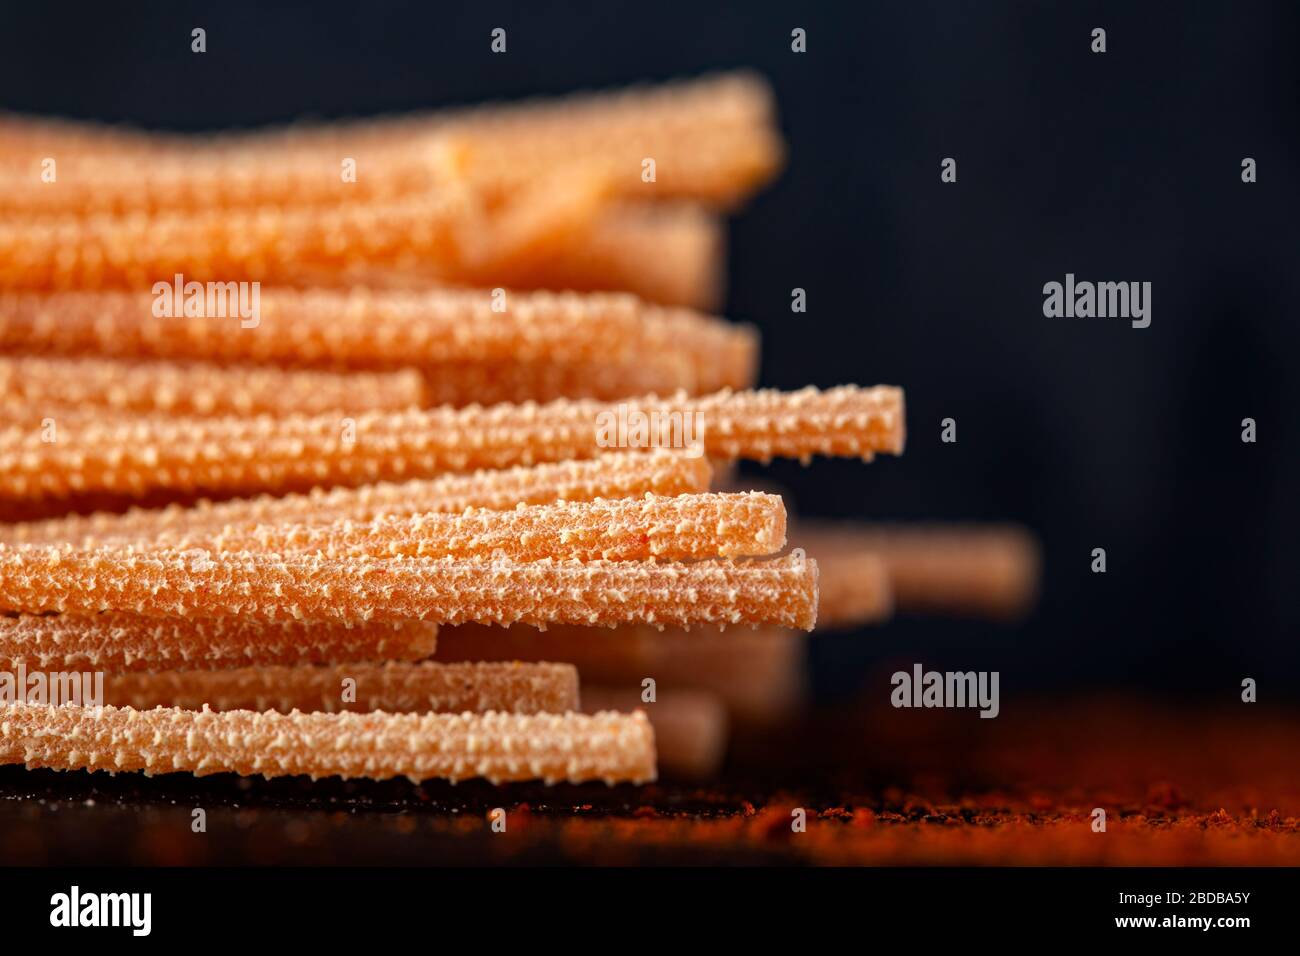 Spaghetti with chili and chili powder - close up view Stock Photo